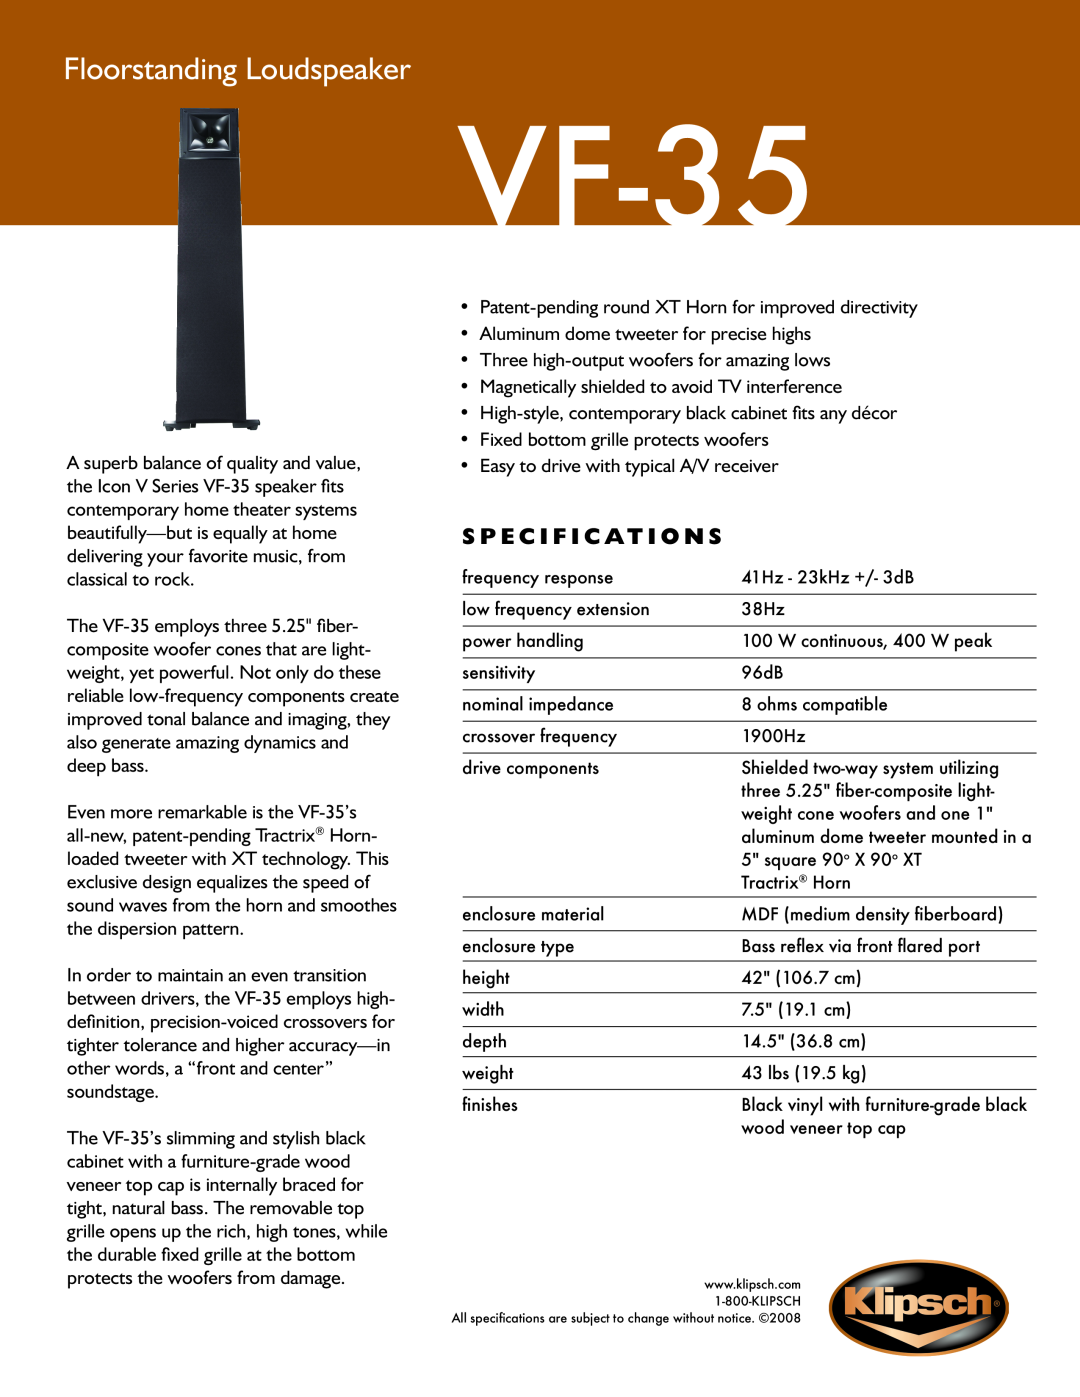 Klipsch VF-35 specifications Floorstanding Loudspeaker, S p e c i f i c a t i o n s 